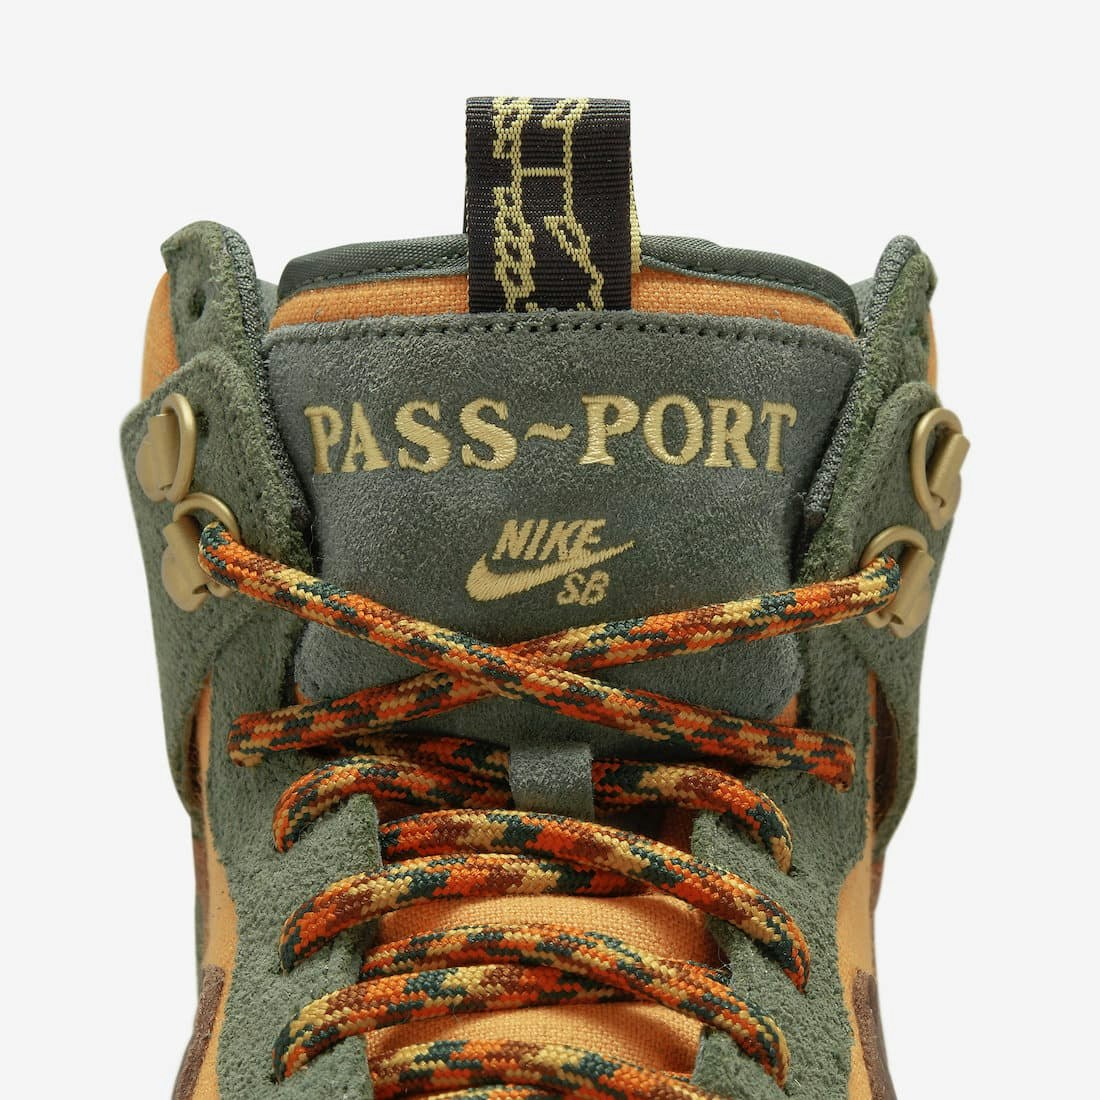 Pass Port x Nike SB Dunk High "Workboot"